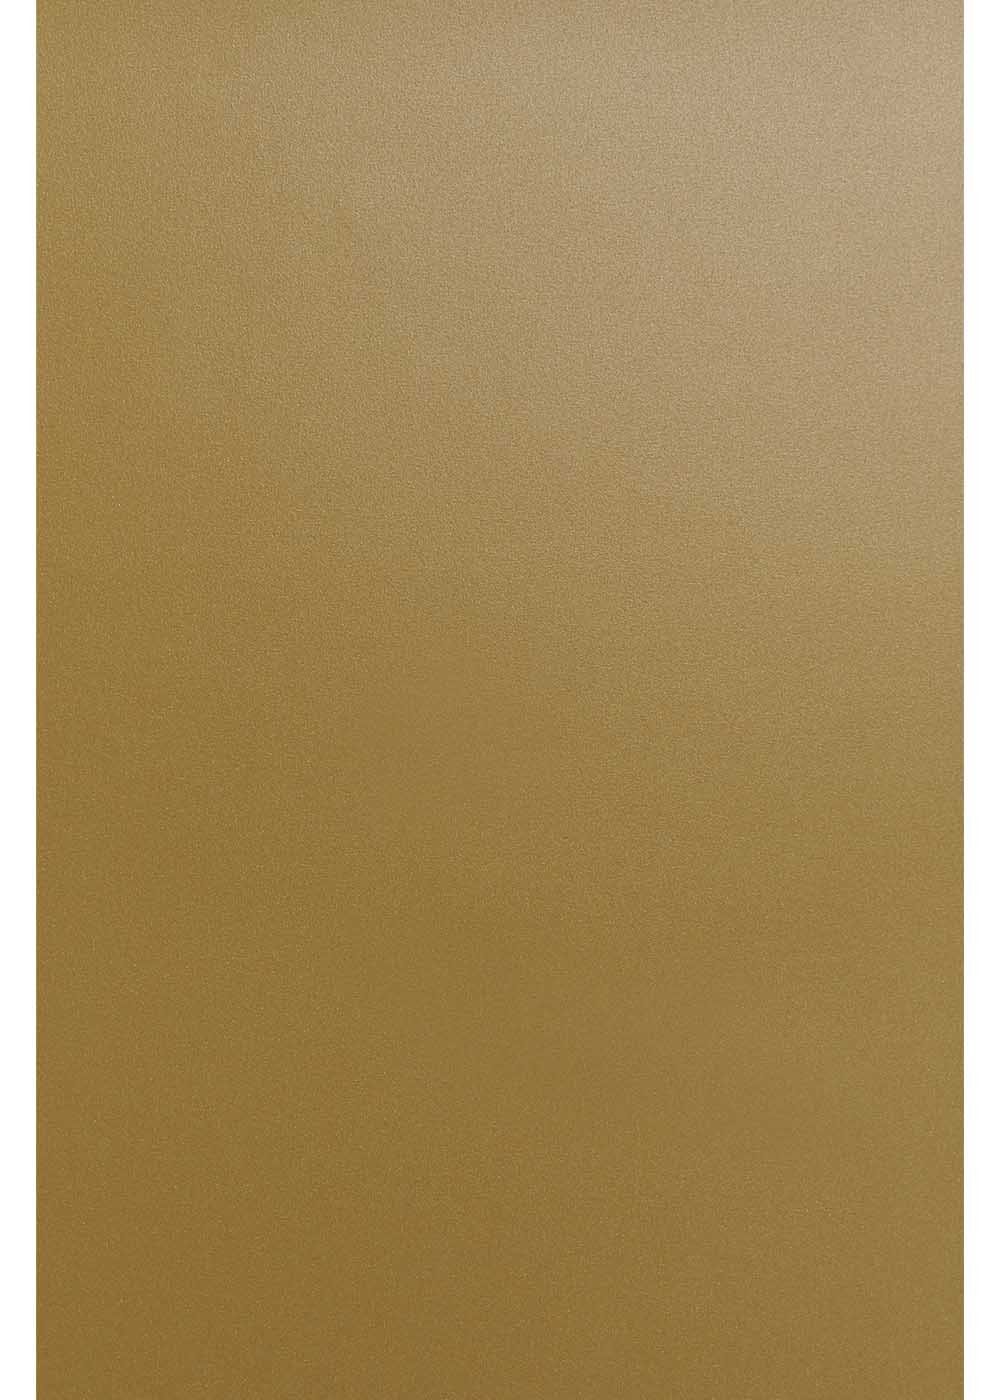 Hilltop Transparentpapier Reflektierende Transferfolie, Textilfolie, mehrfarbig, 30x20 cm Gold